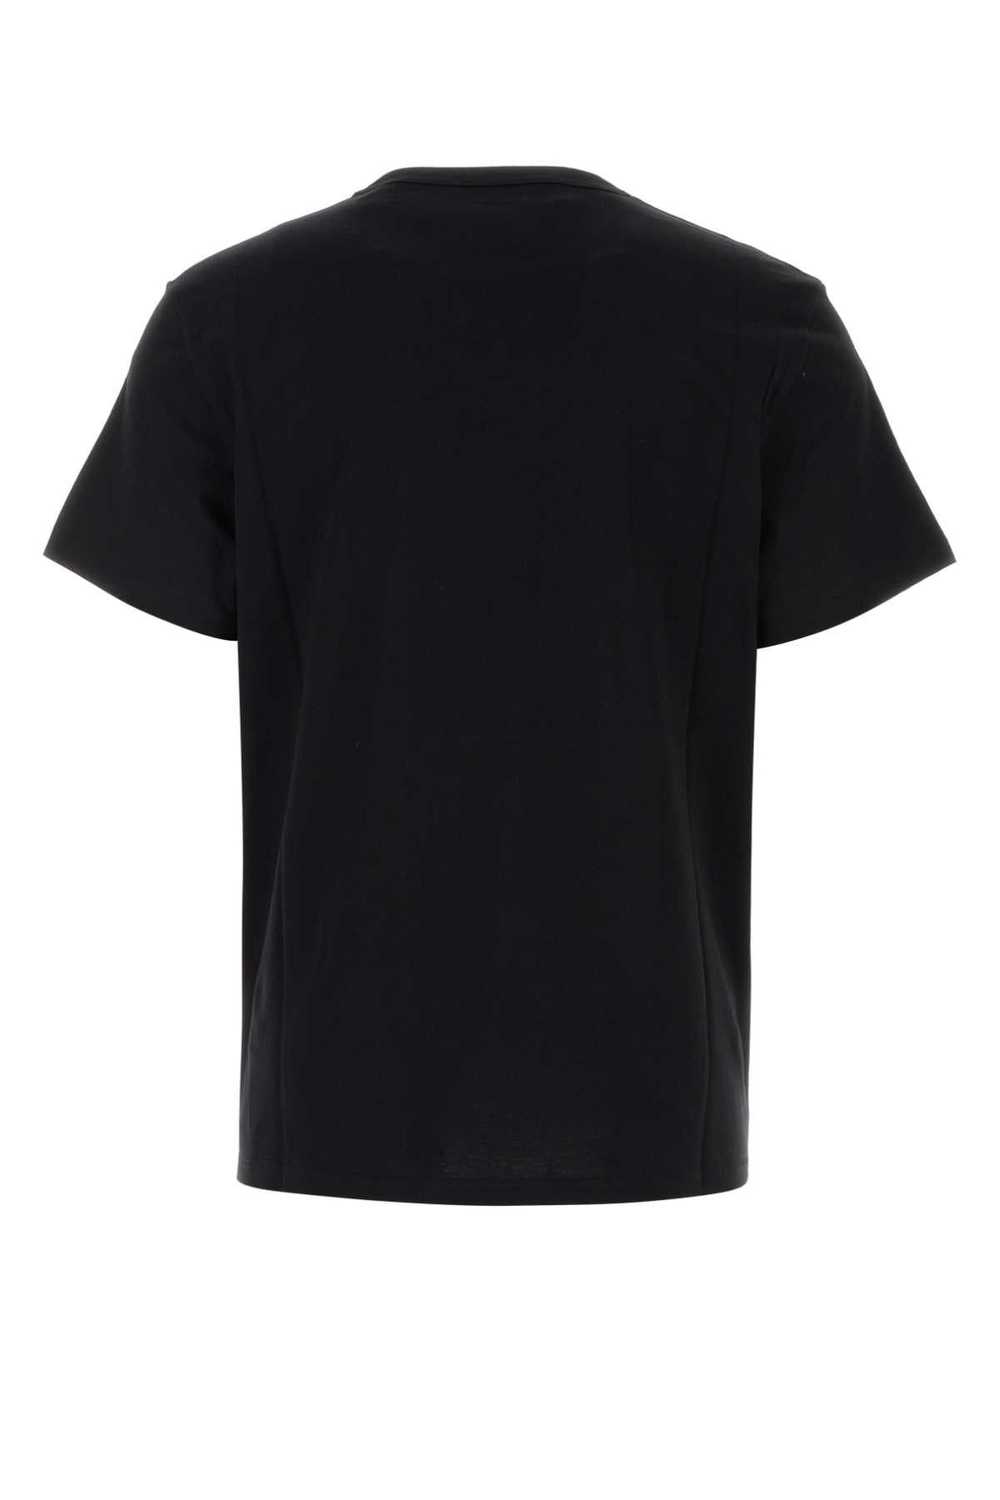 Alexander McQueen Black Cotton T-Shirt - image 2